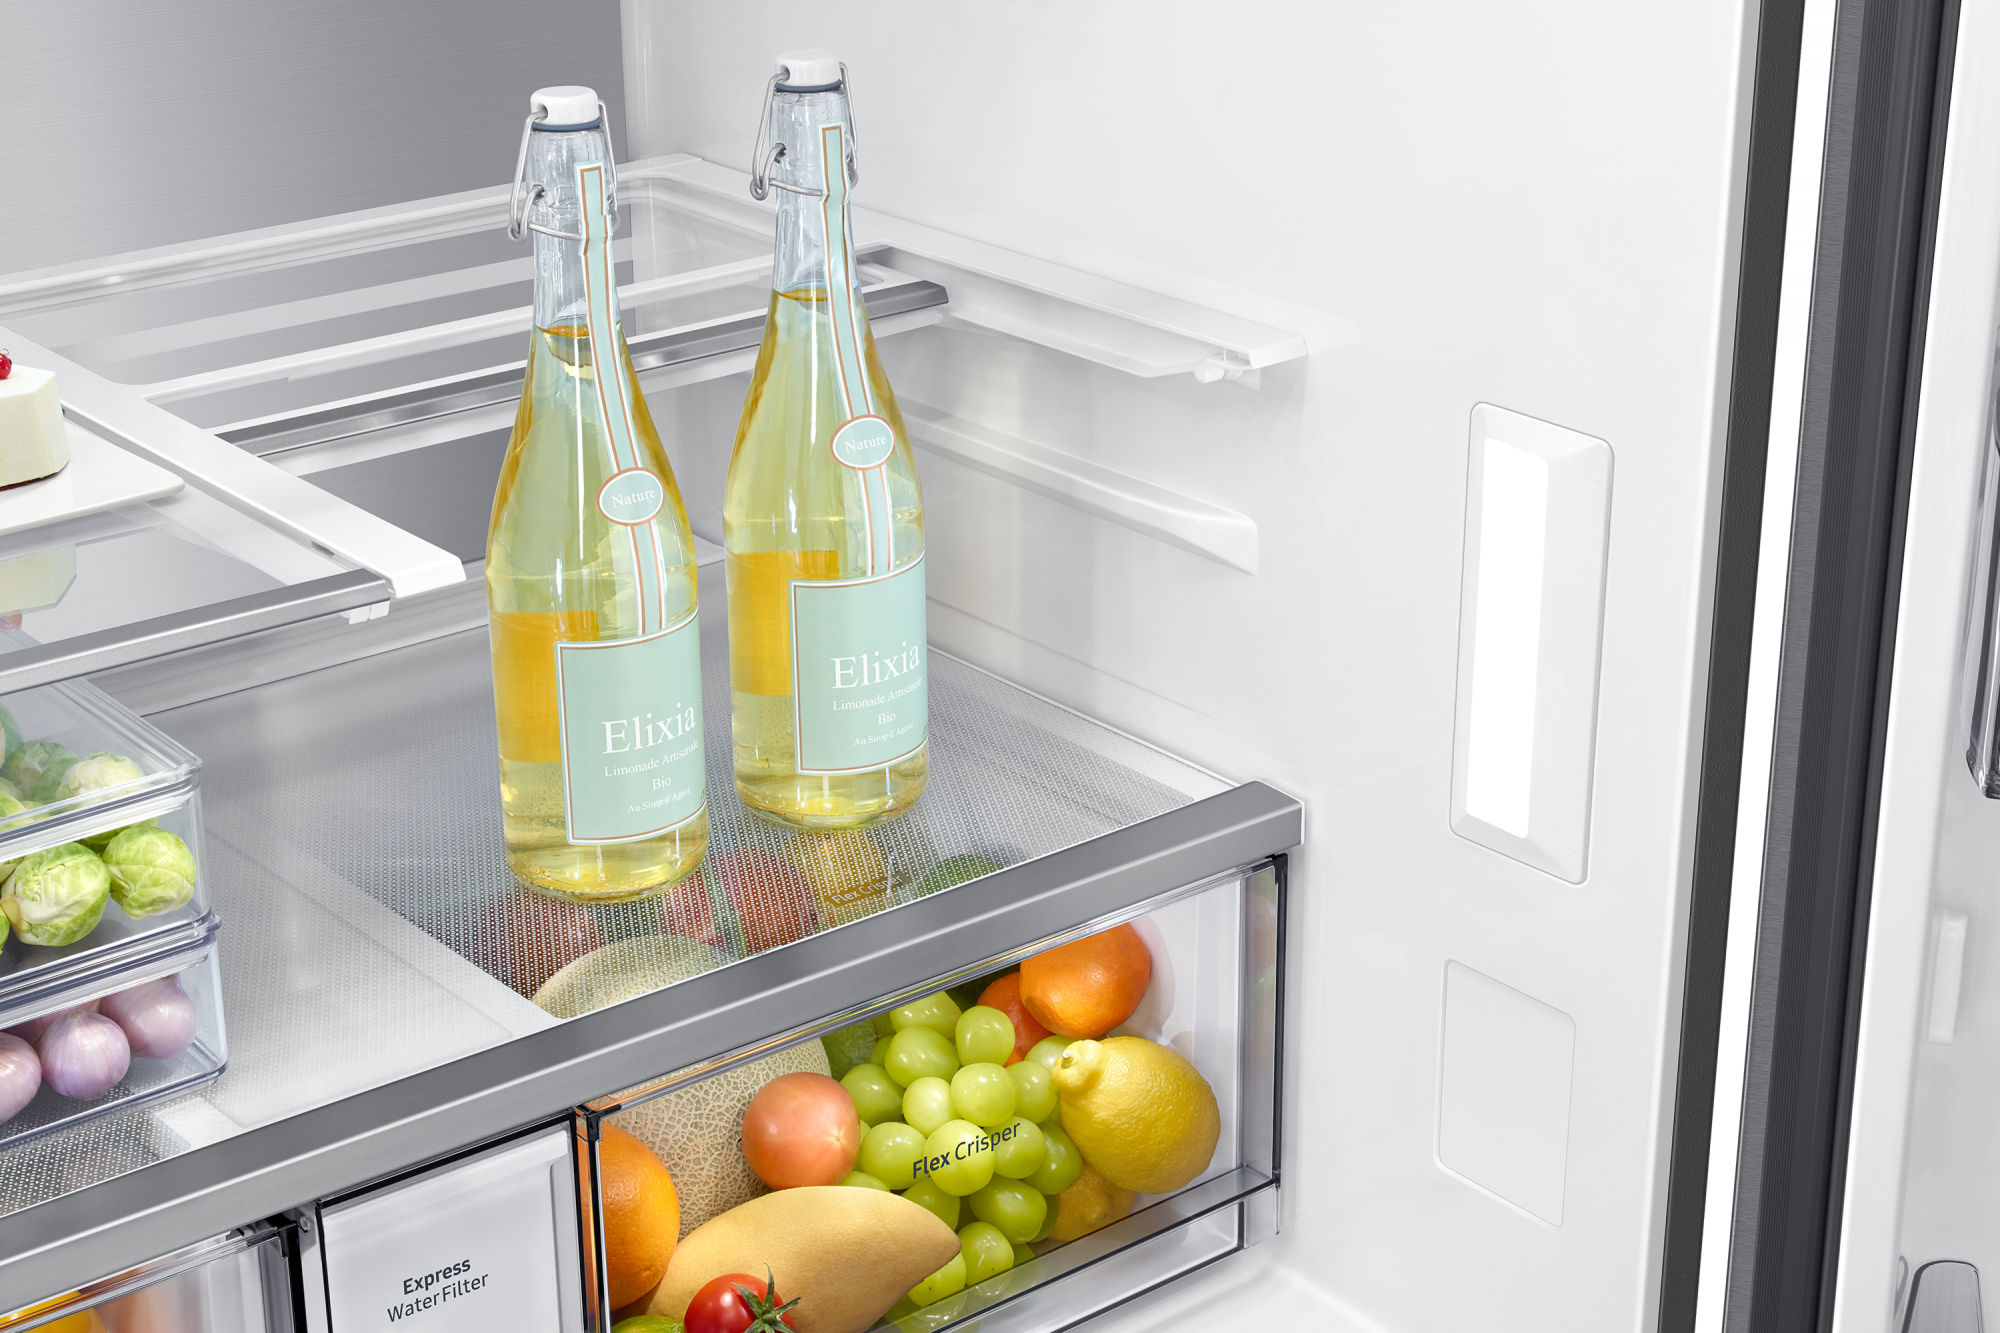 Les réfrigérateurs 4 portes de la gamme RF9000 de Samsung arrivent en  France – Samsung Newsroom France